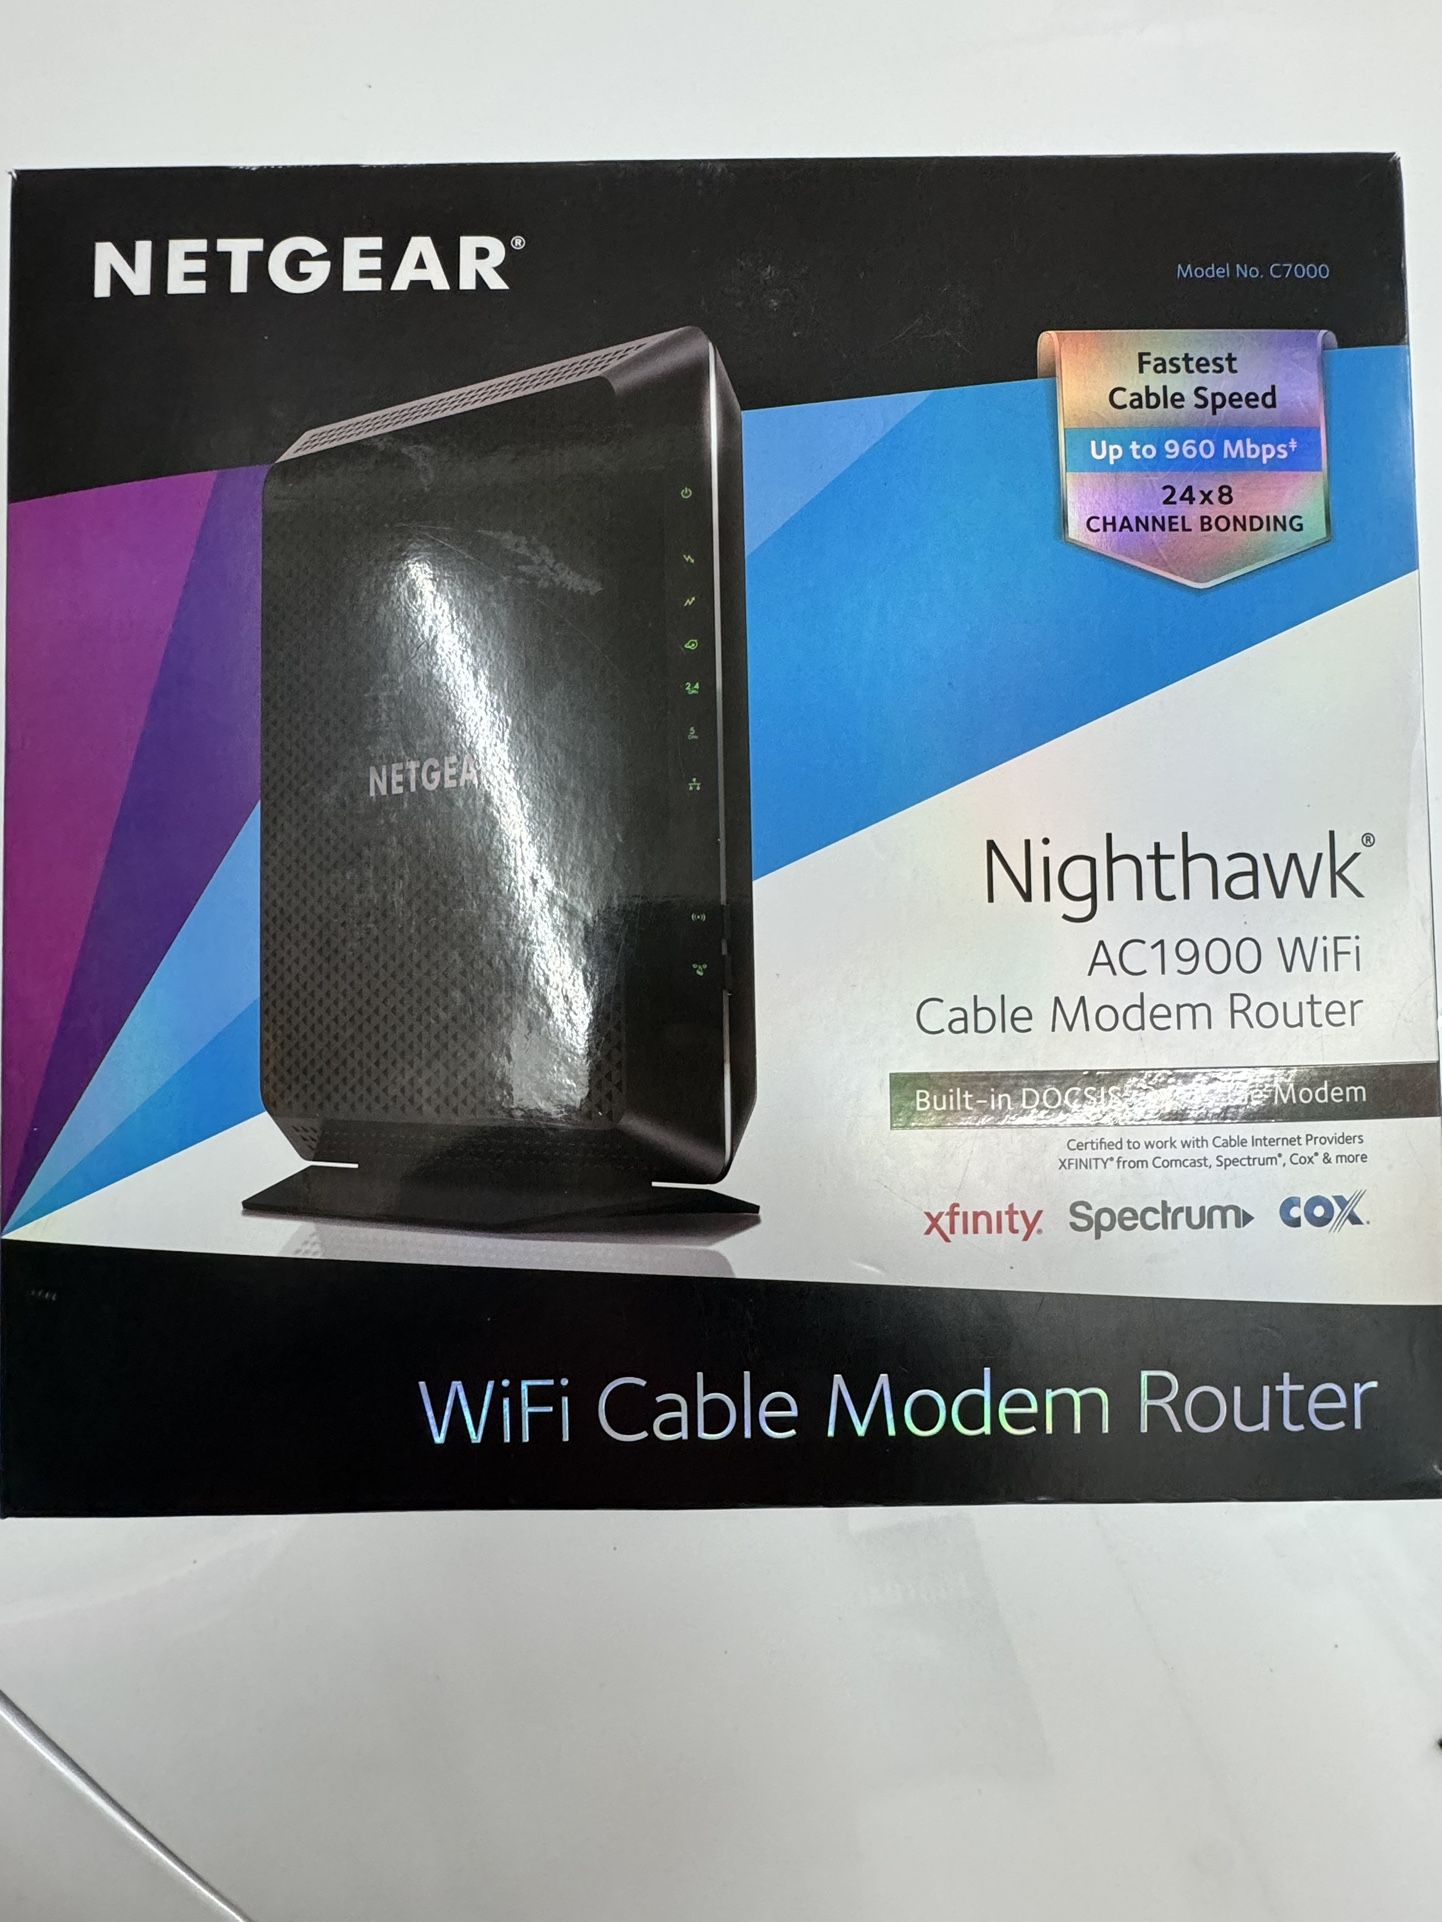 Netgear NIGHTHAWK AC1900 WiFi Cable Modem Router